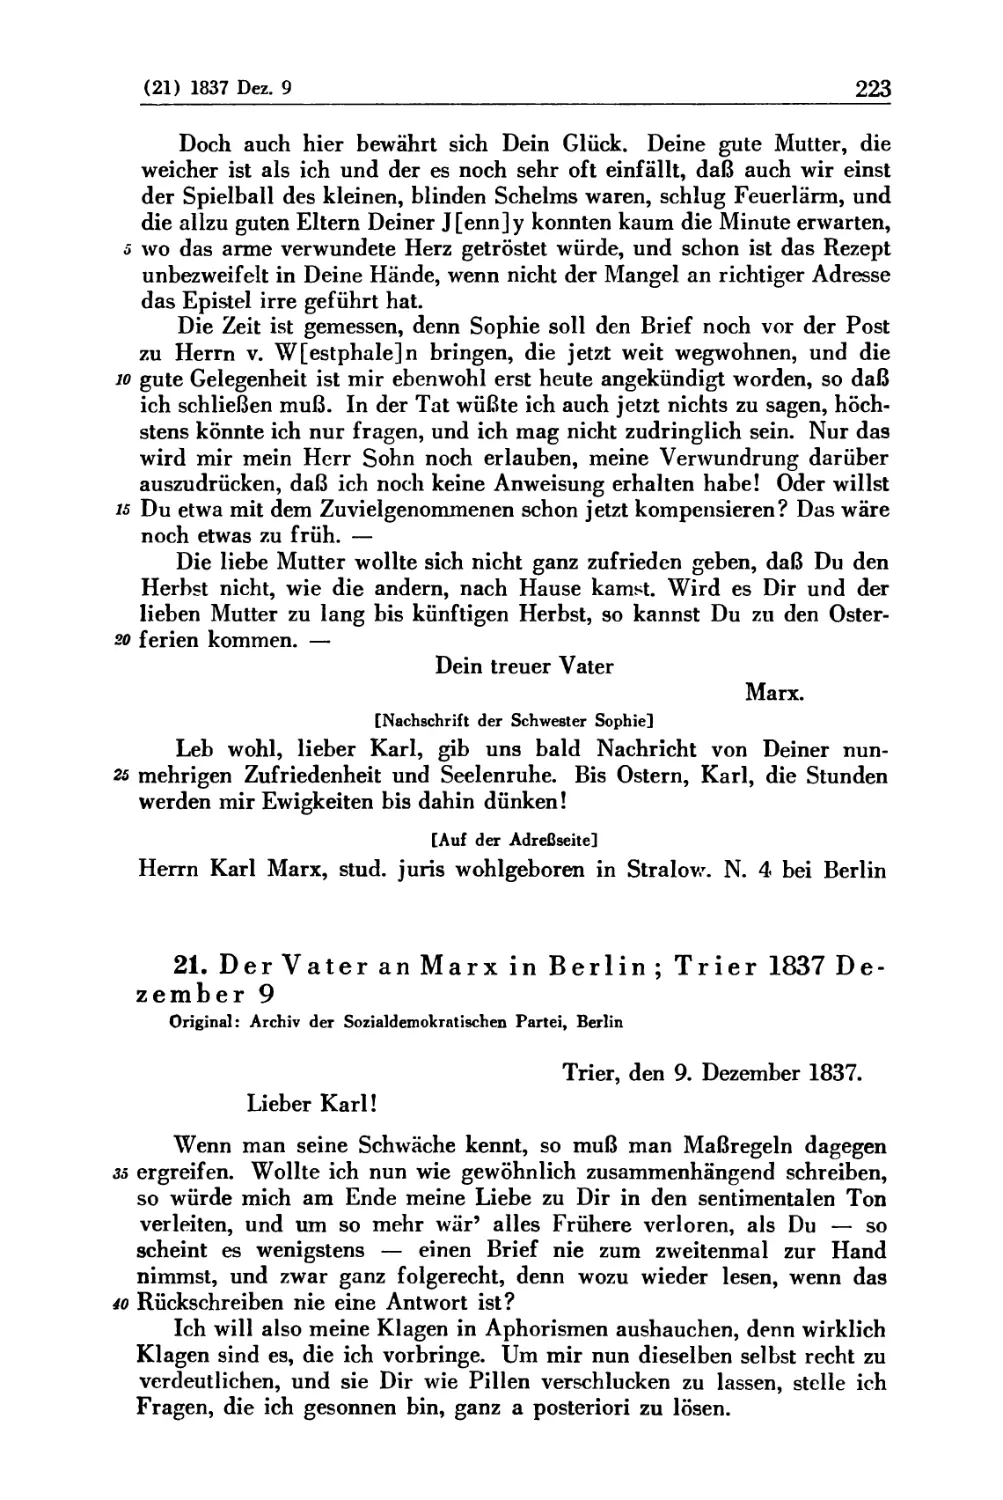 21. Der Vater an Marx in Berlin; Trier 1837 Dezember 9